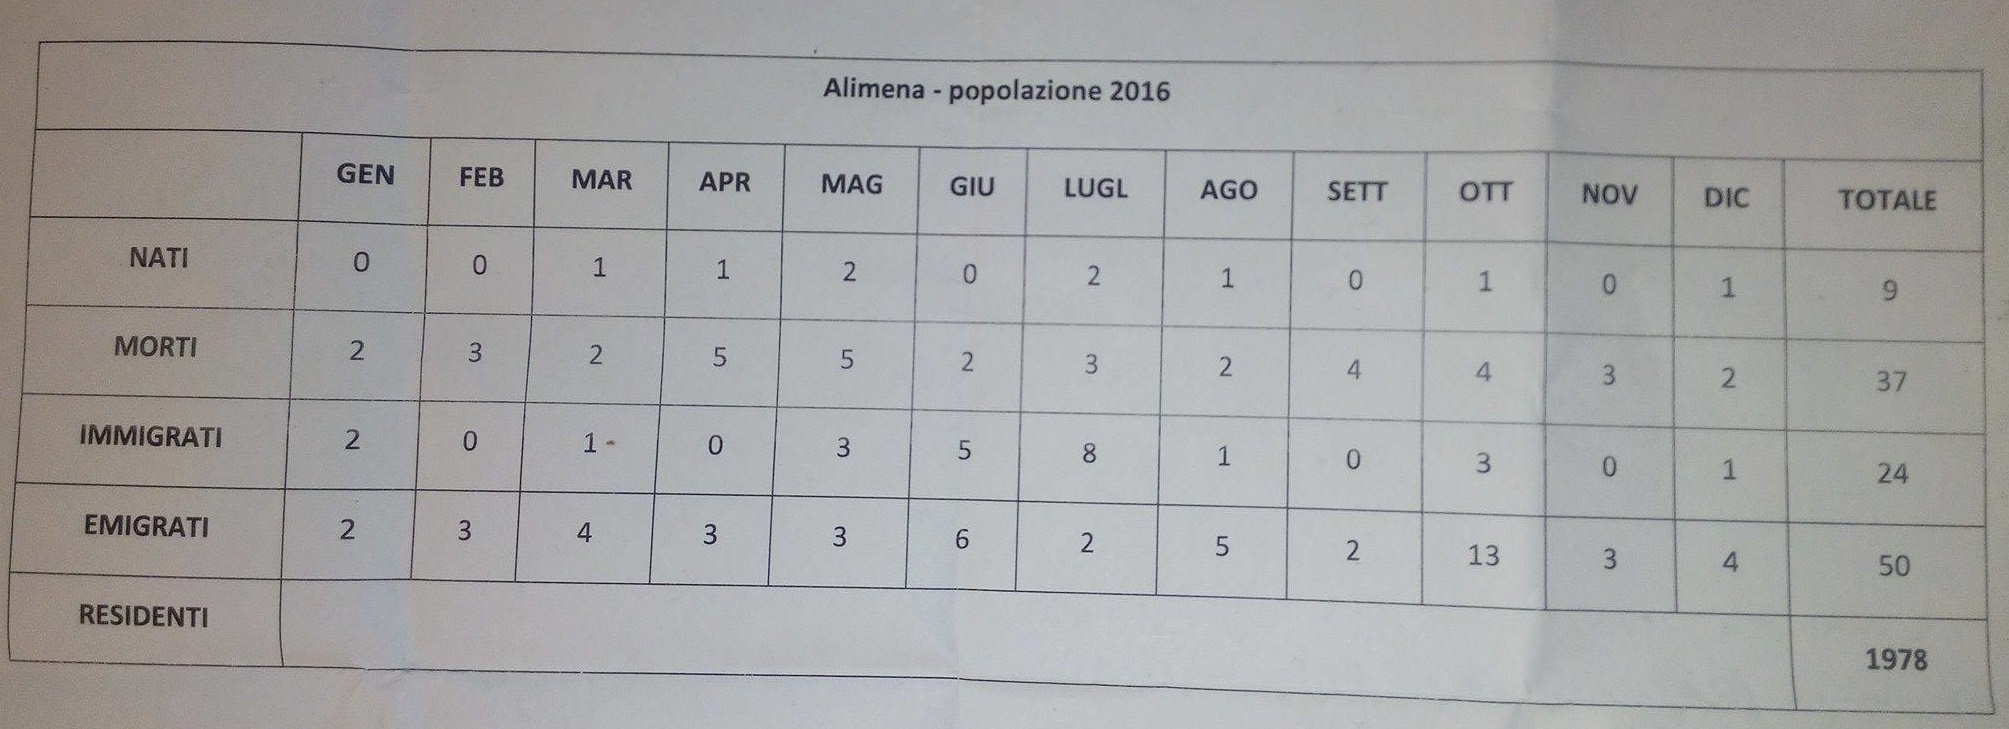 censimento-alimena-al-31-12-2015